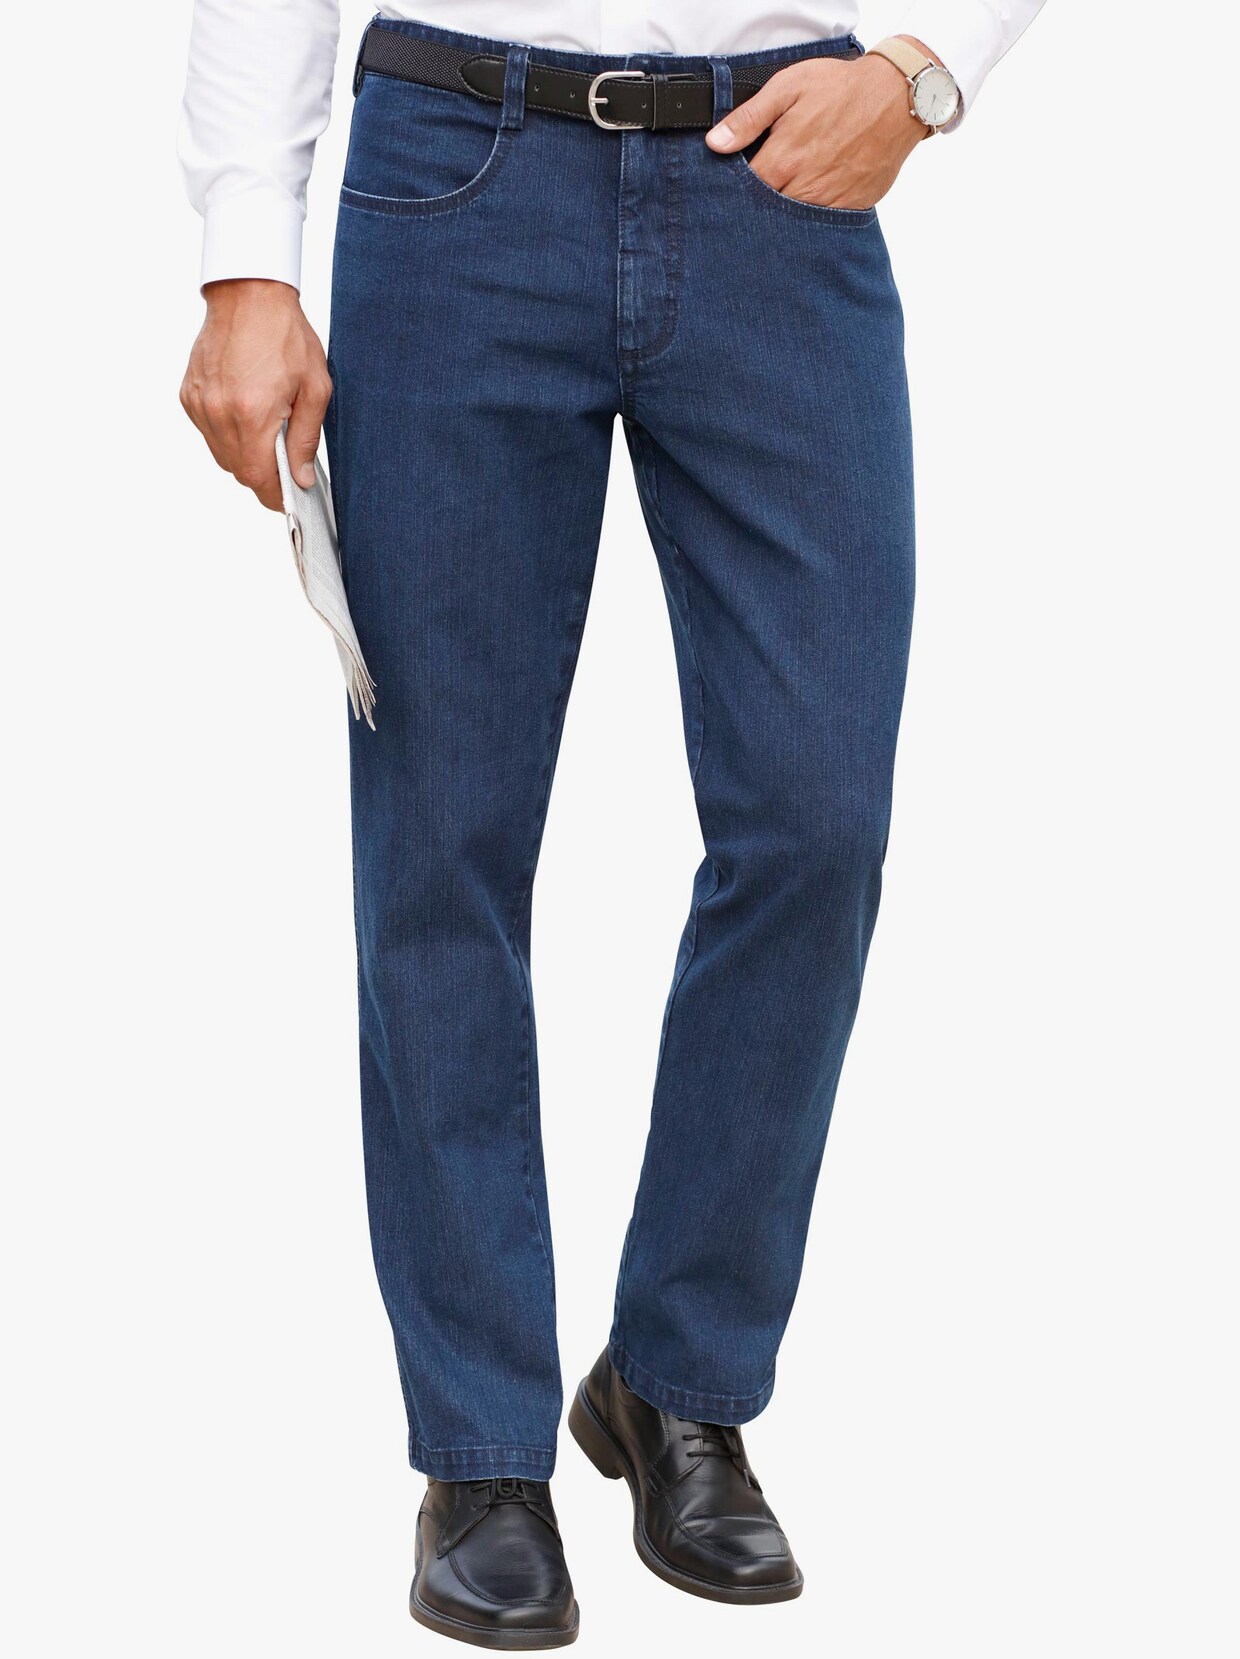 Jeans mit Gürtel - blue-stone-washed